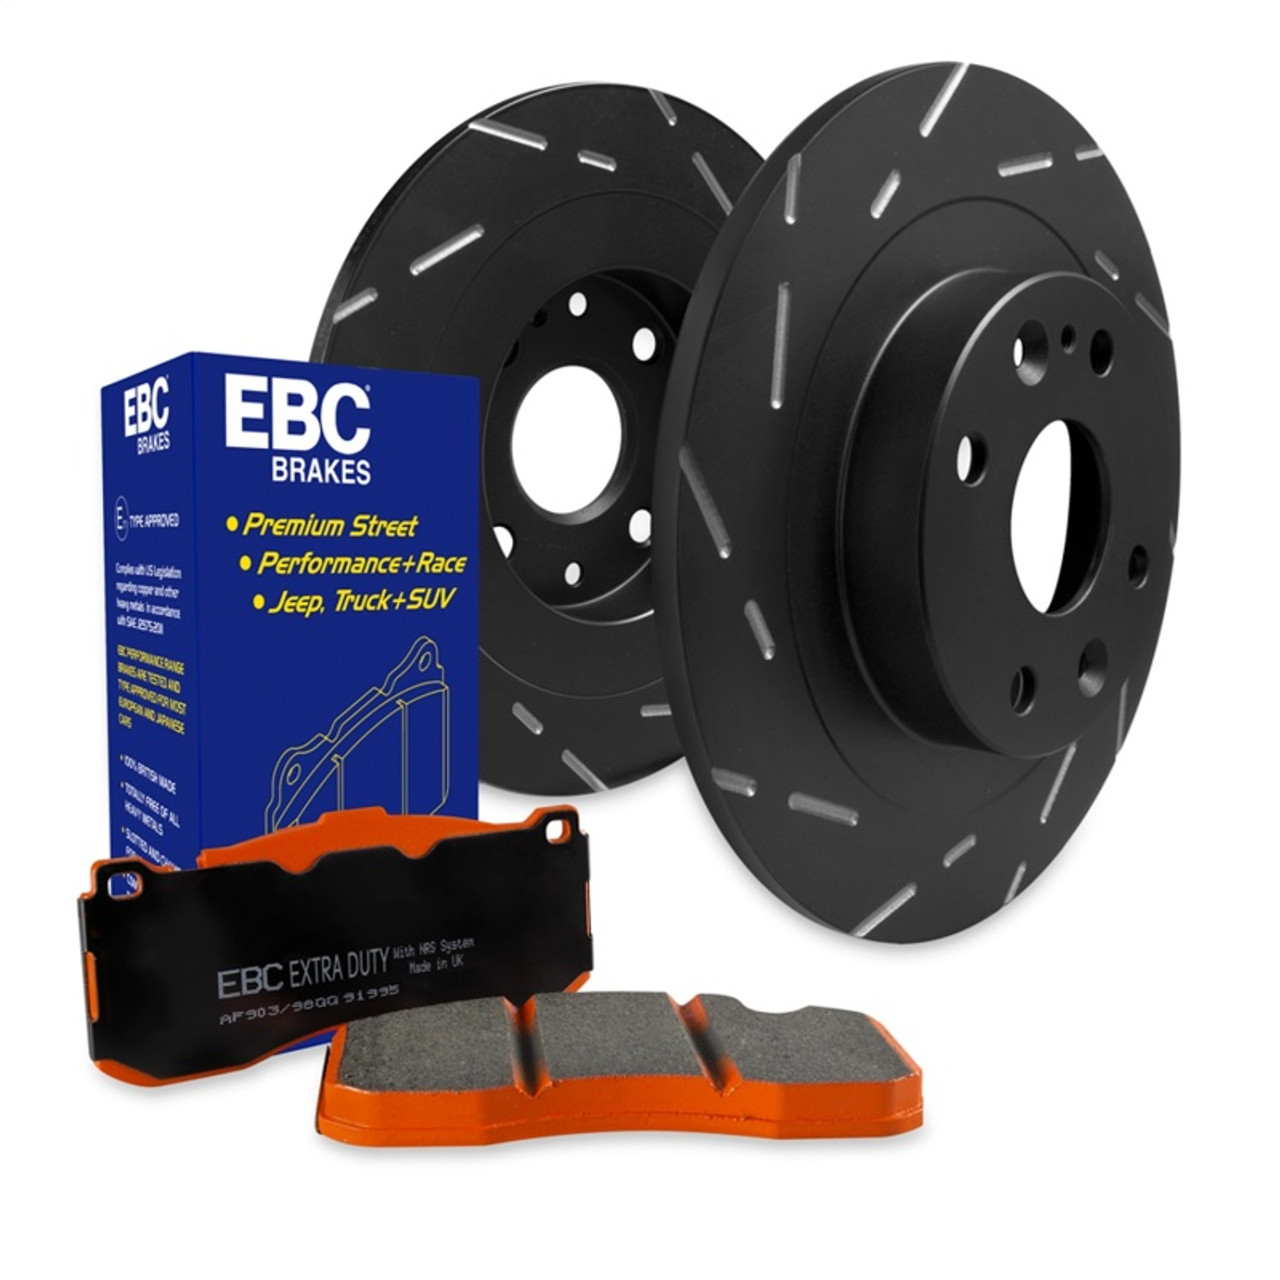 EBC S15 Orangestuff Pads and USR Rotors - S15KR1060 Photo - Primary